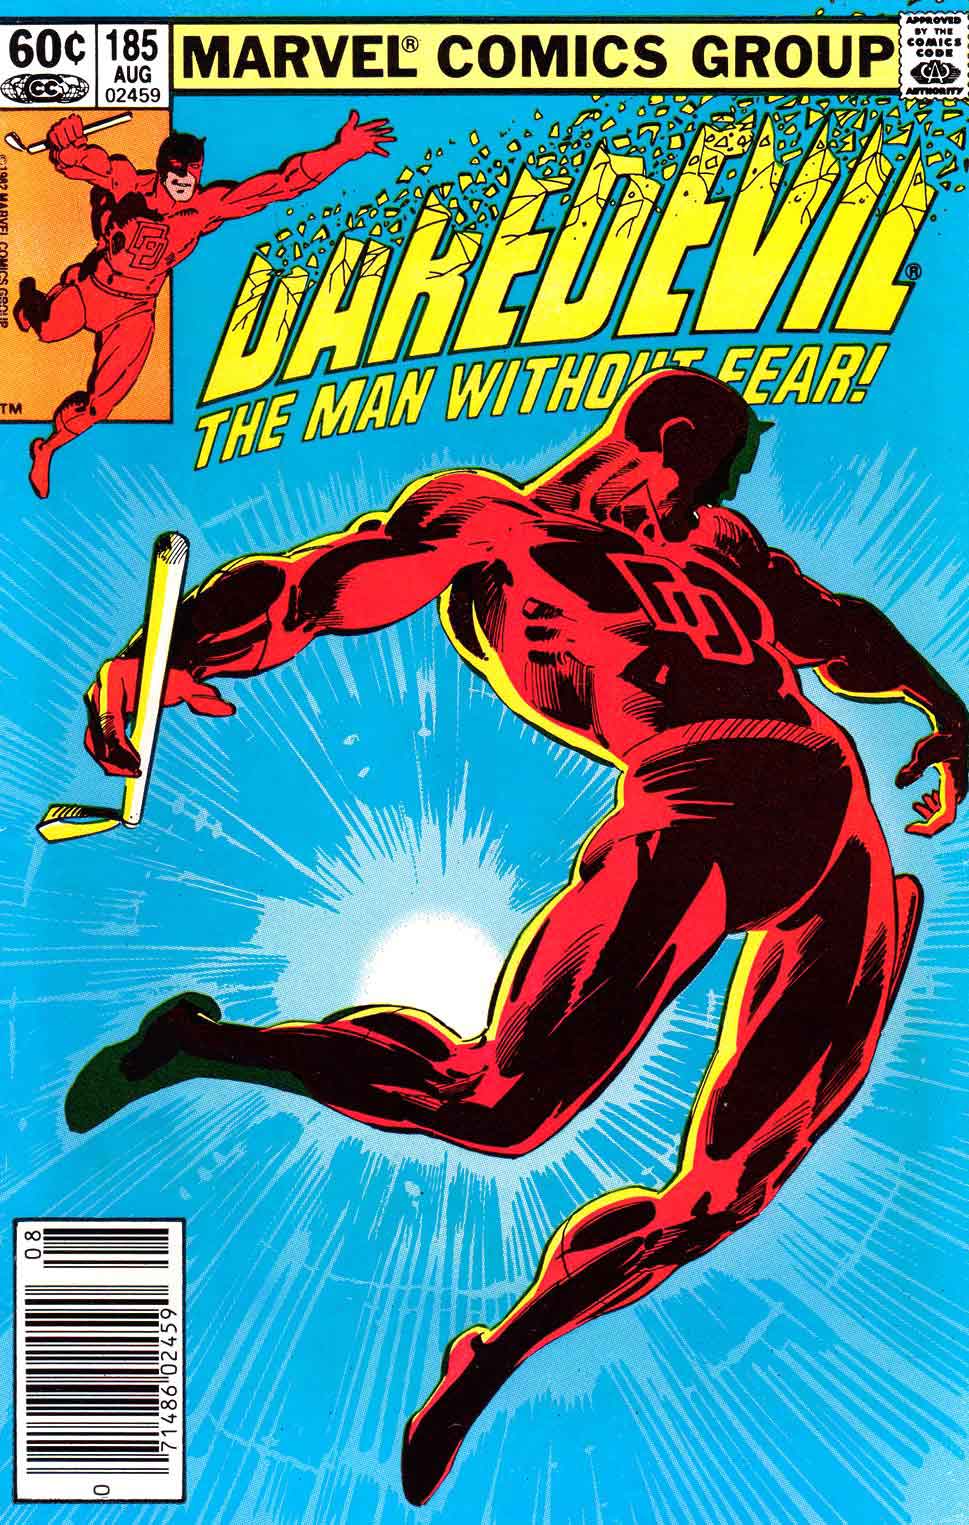 Daredevil #185 bronze age marvel comic book cover art by Frank Miller